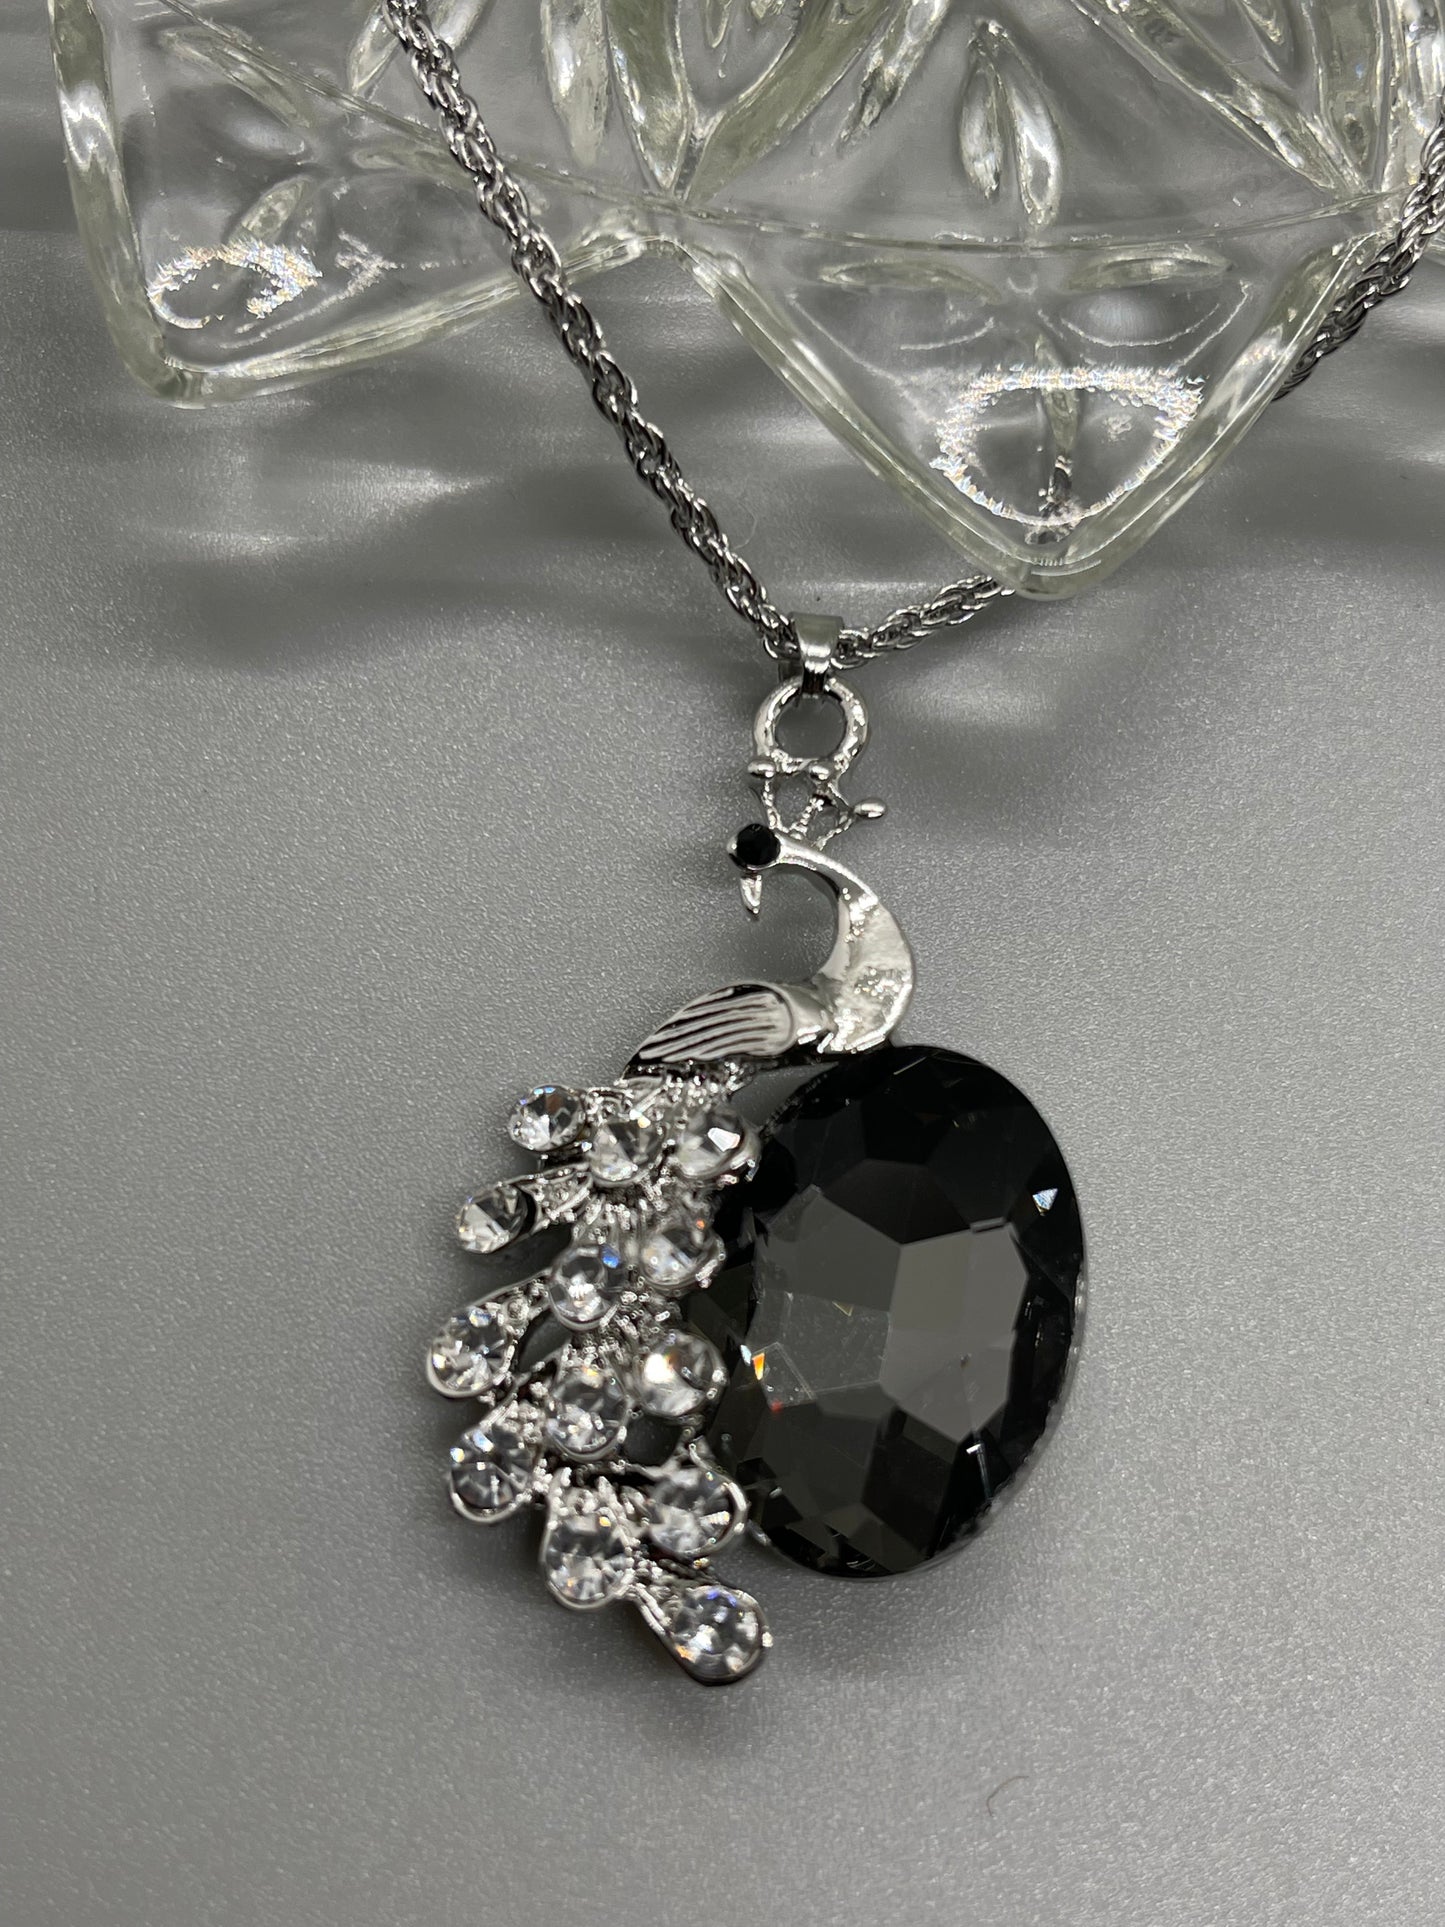 Black crystal rhinestone peacock silver necklace earrings set